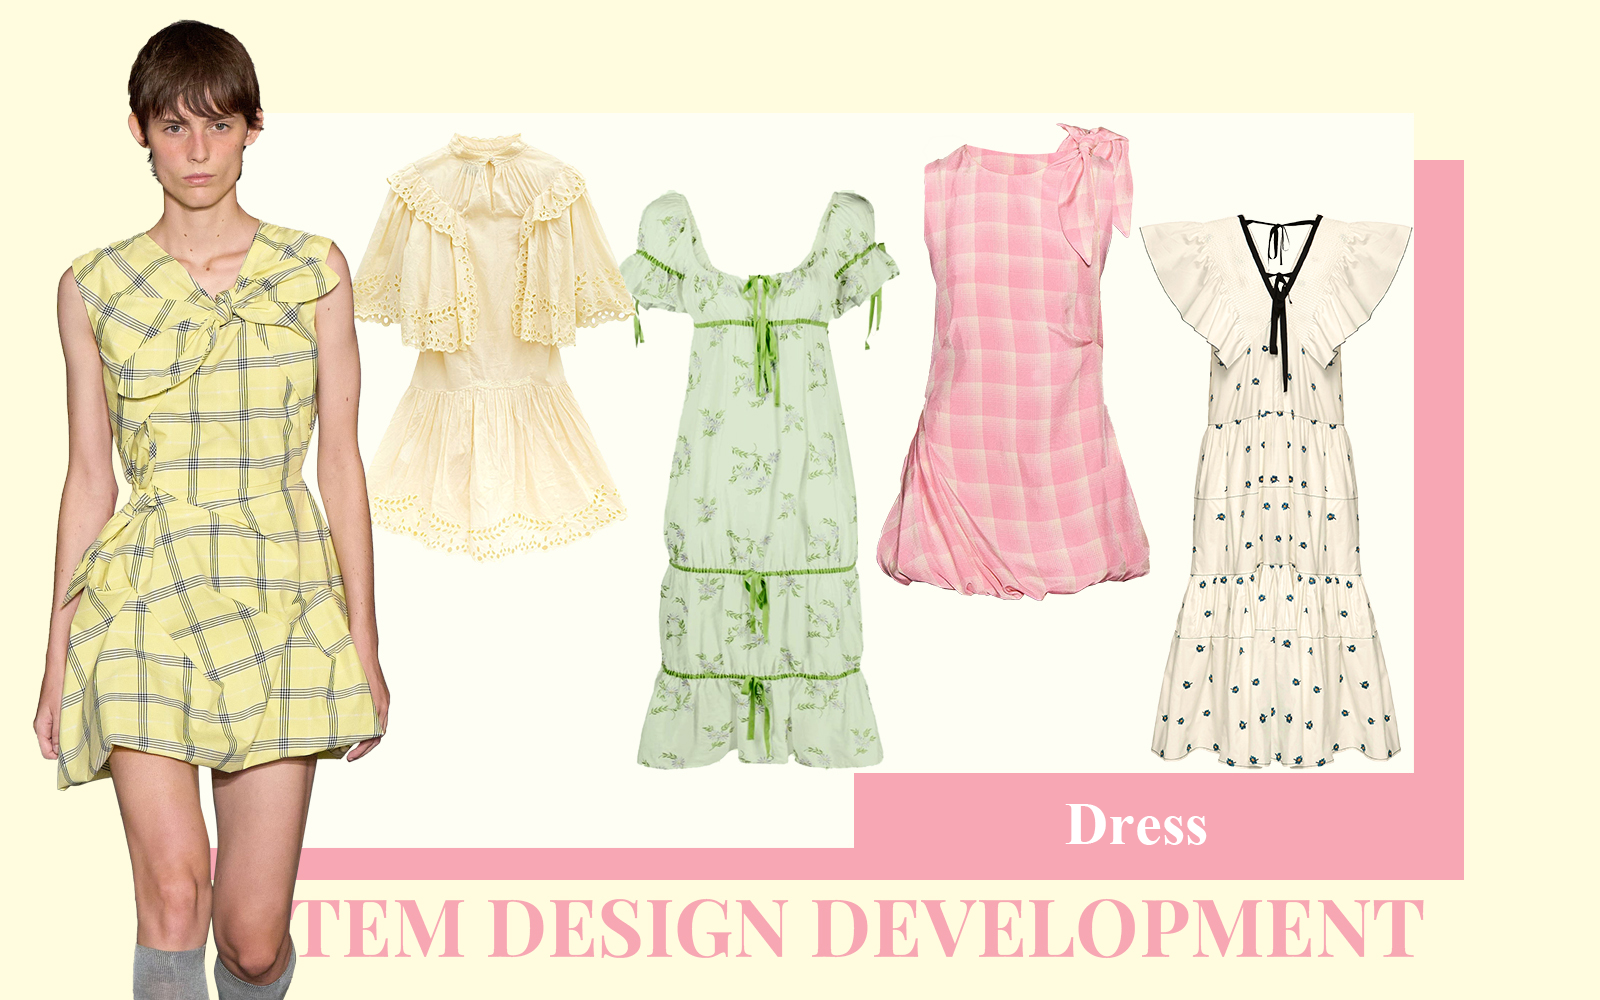 The Design Development of Women's Dress